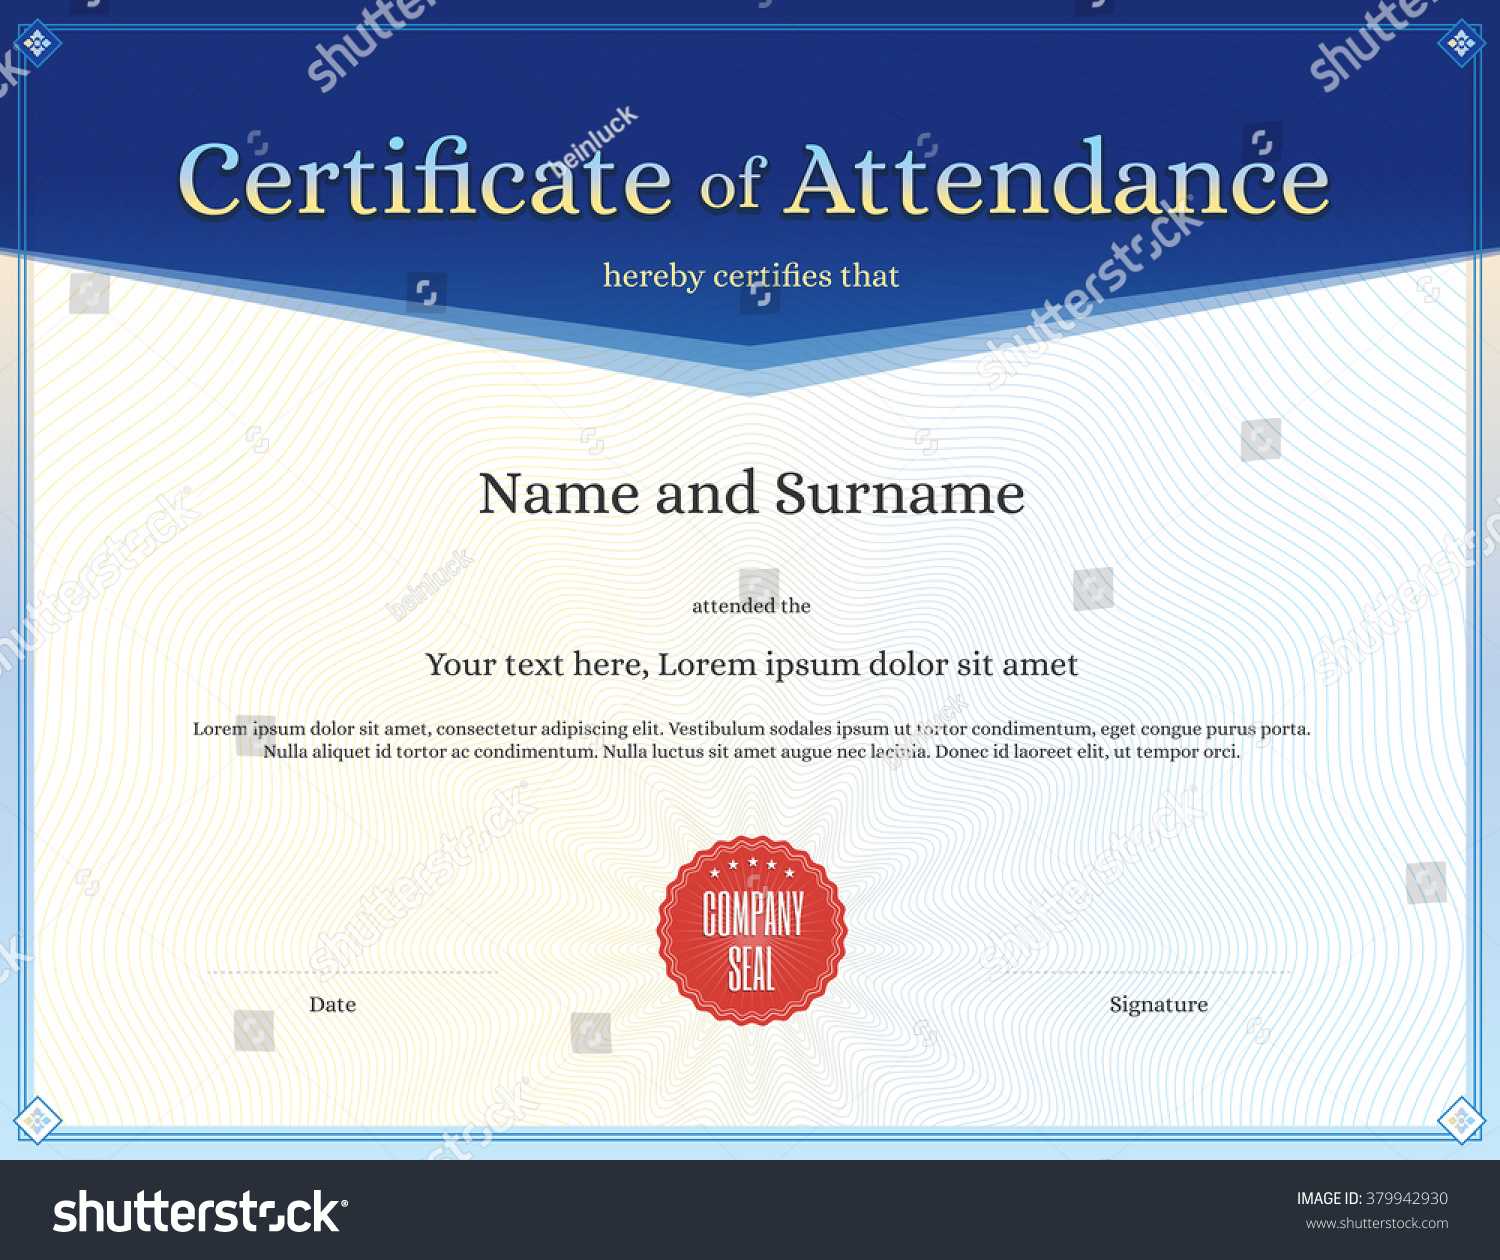 Certificate Completion Template Fresh Certificates Fice Regarding Conference Certificate Of Attendance Template